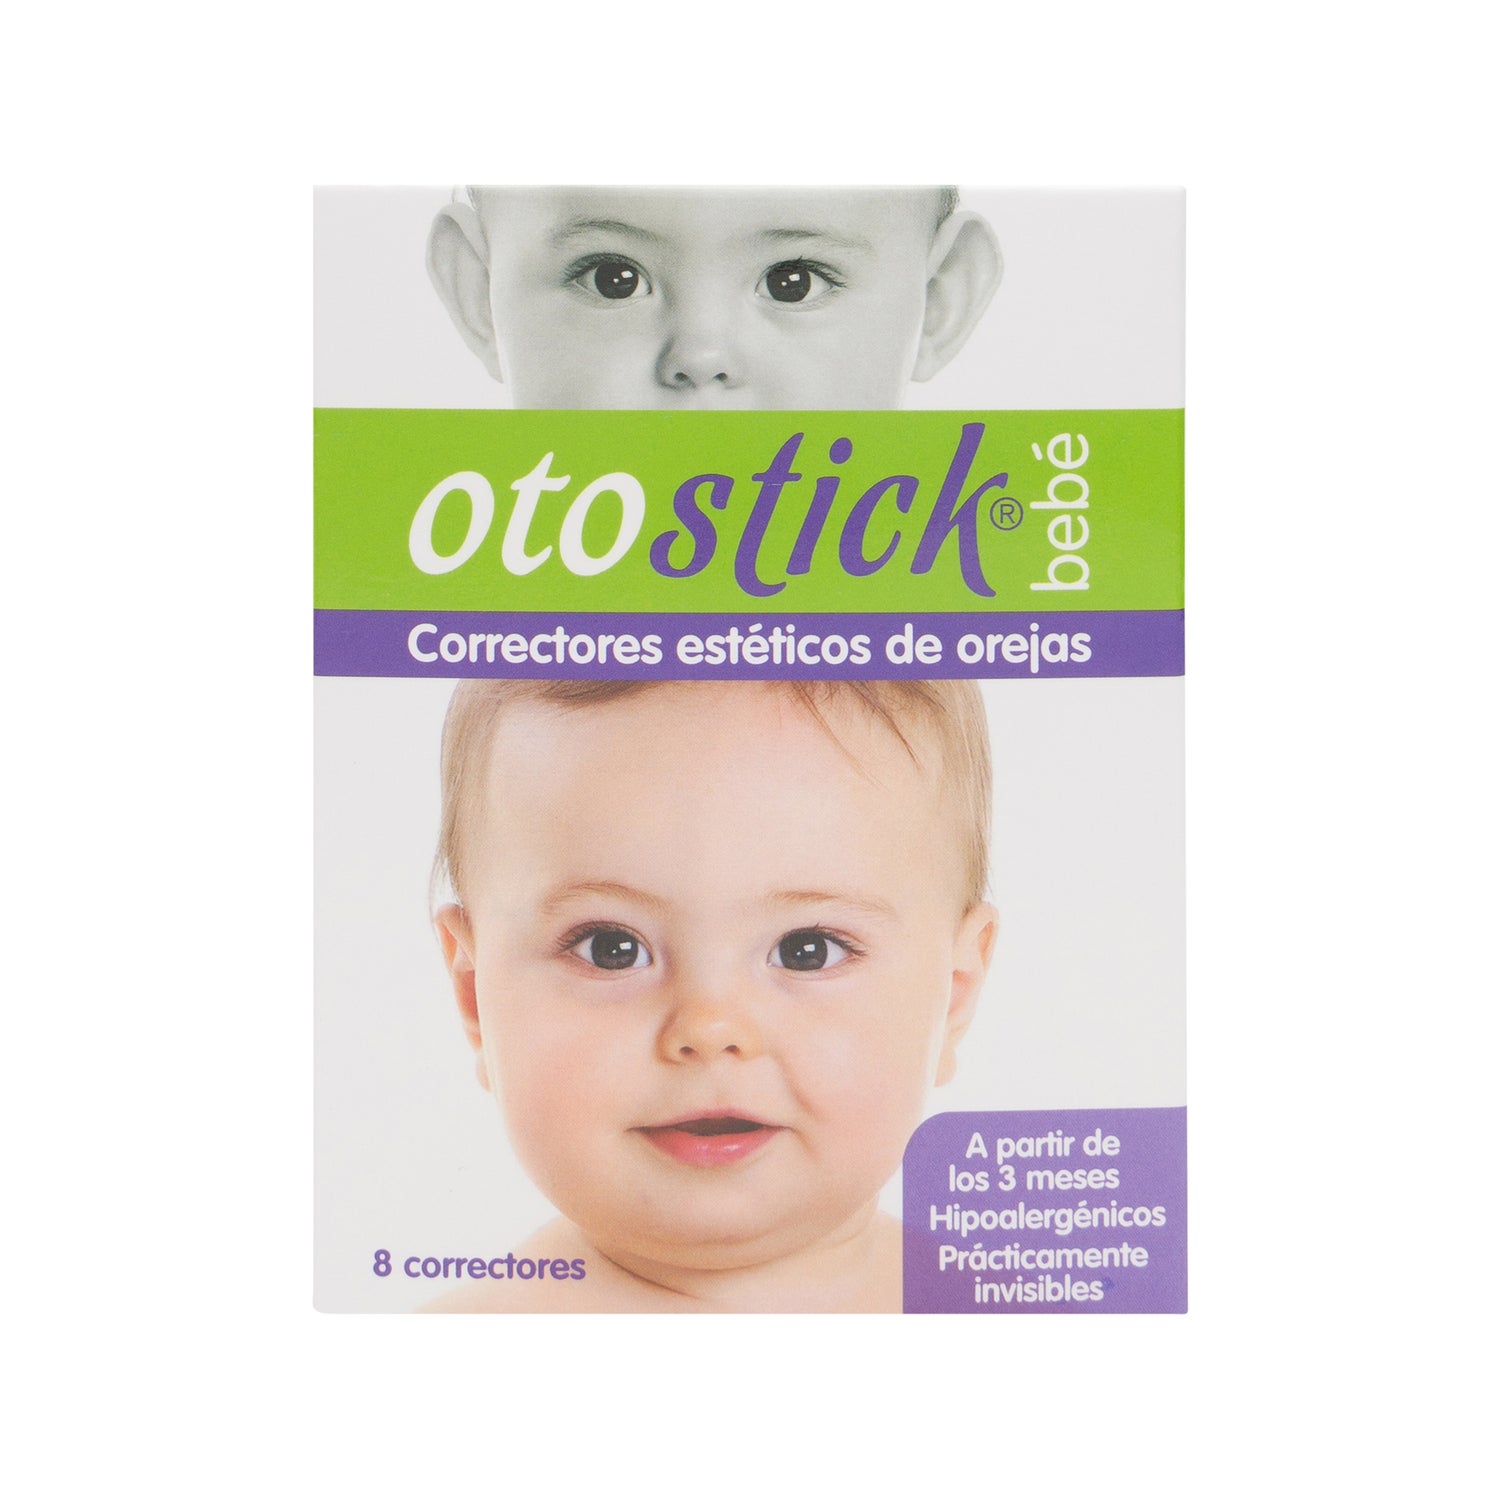 Buy Otostick Ear Correctors 8 Units. Deals on Otostick brand. Buy